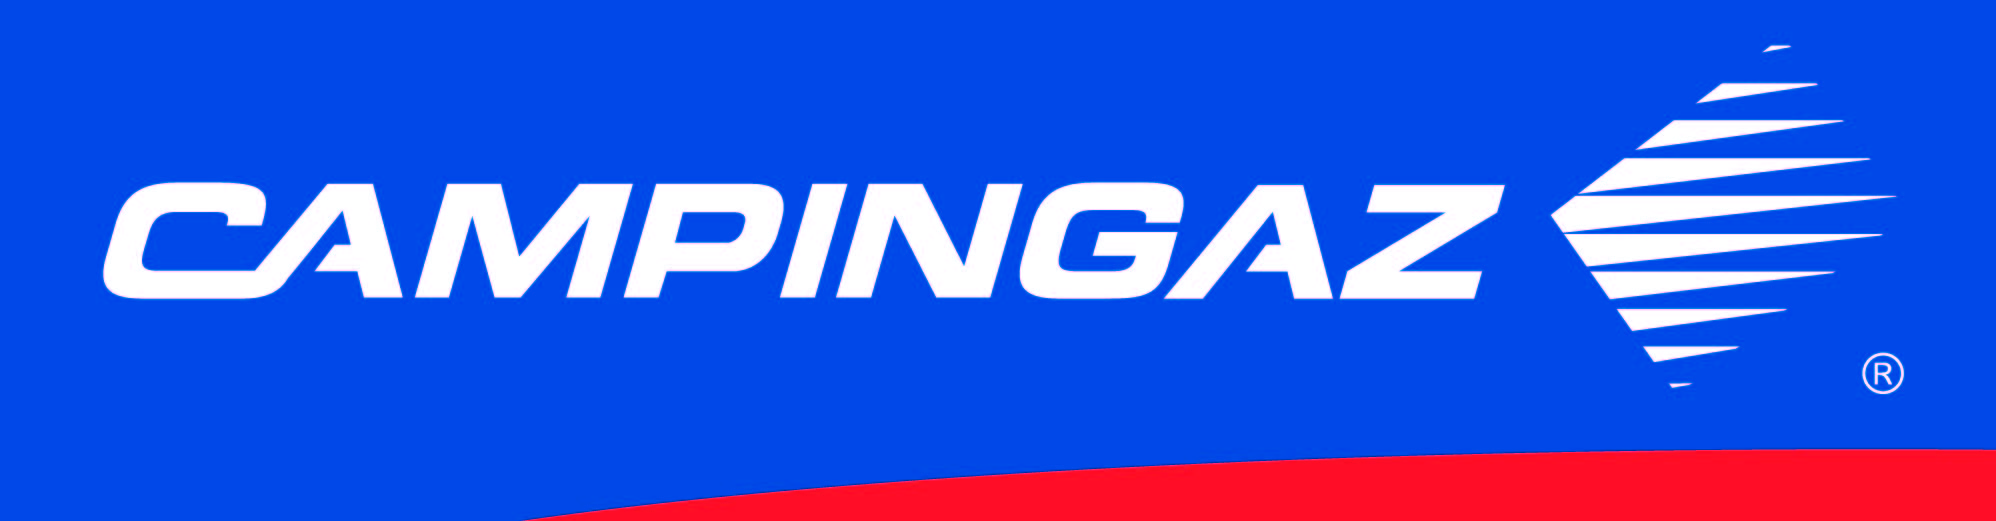 Campingaz Logo photo - 1